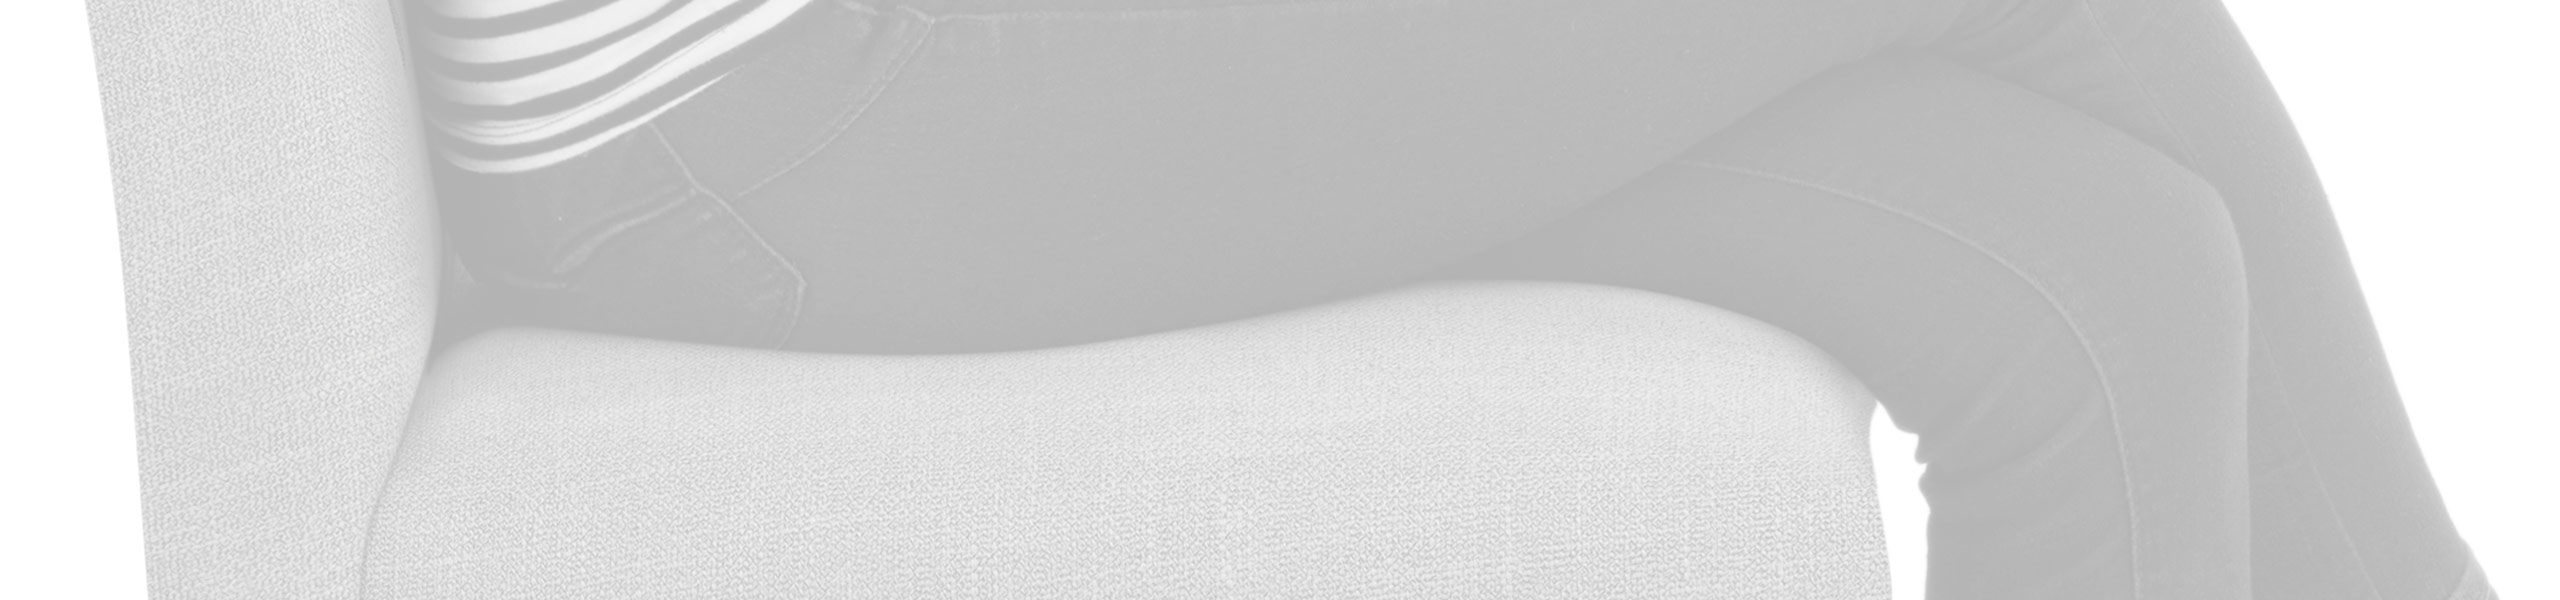 Barrington Oak Dining Chair Grey Fabric Review Banner